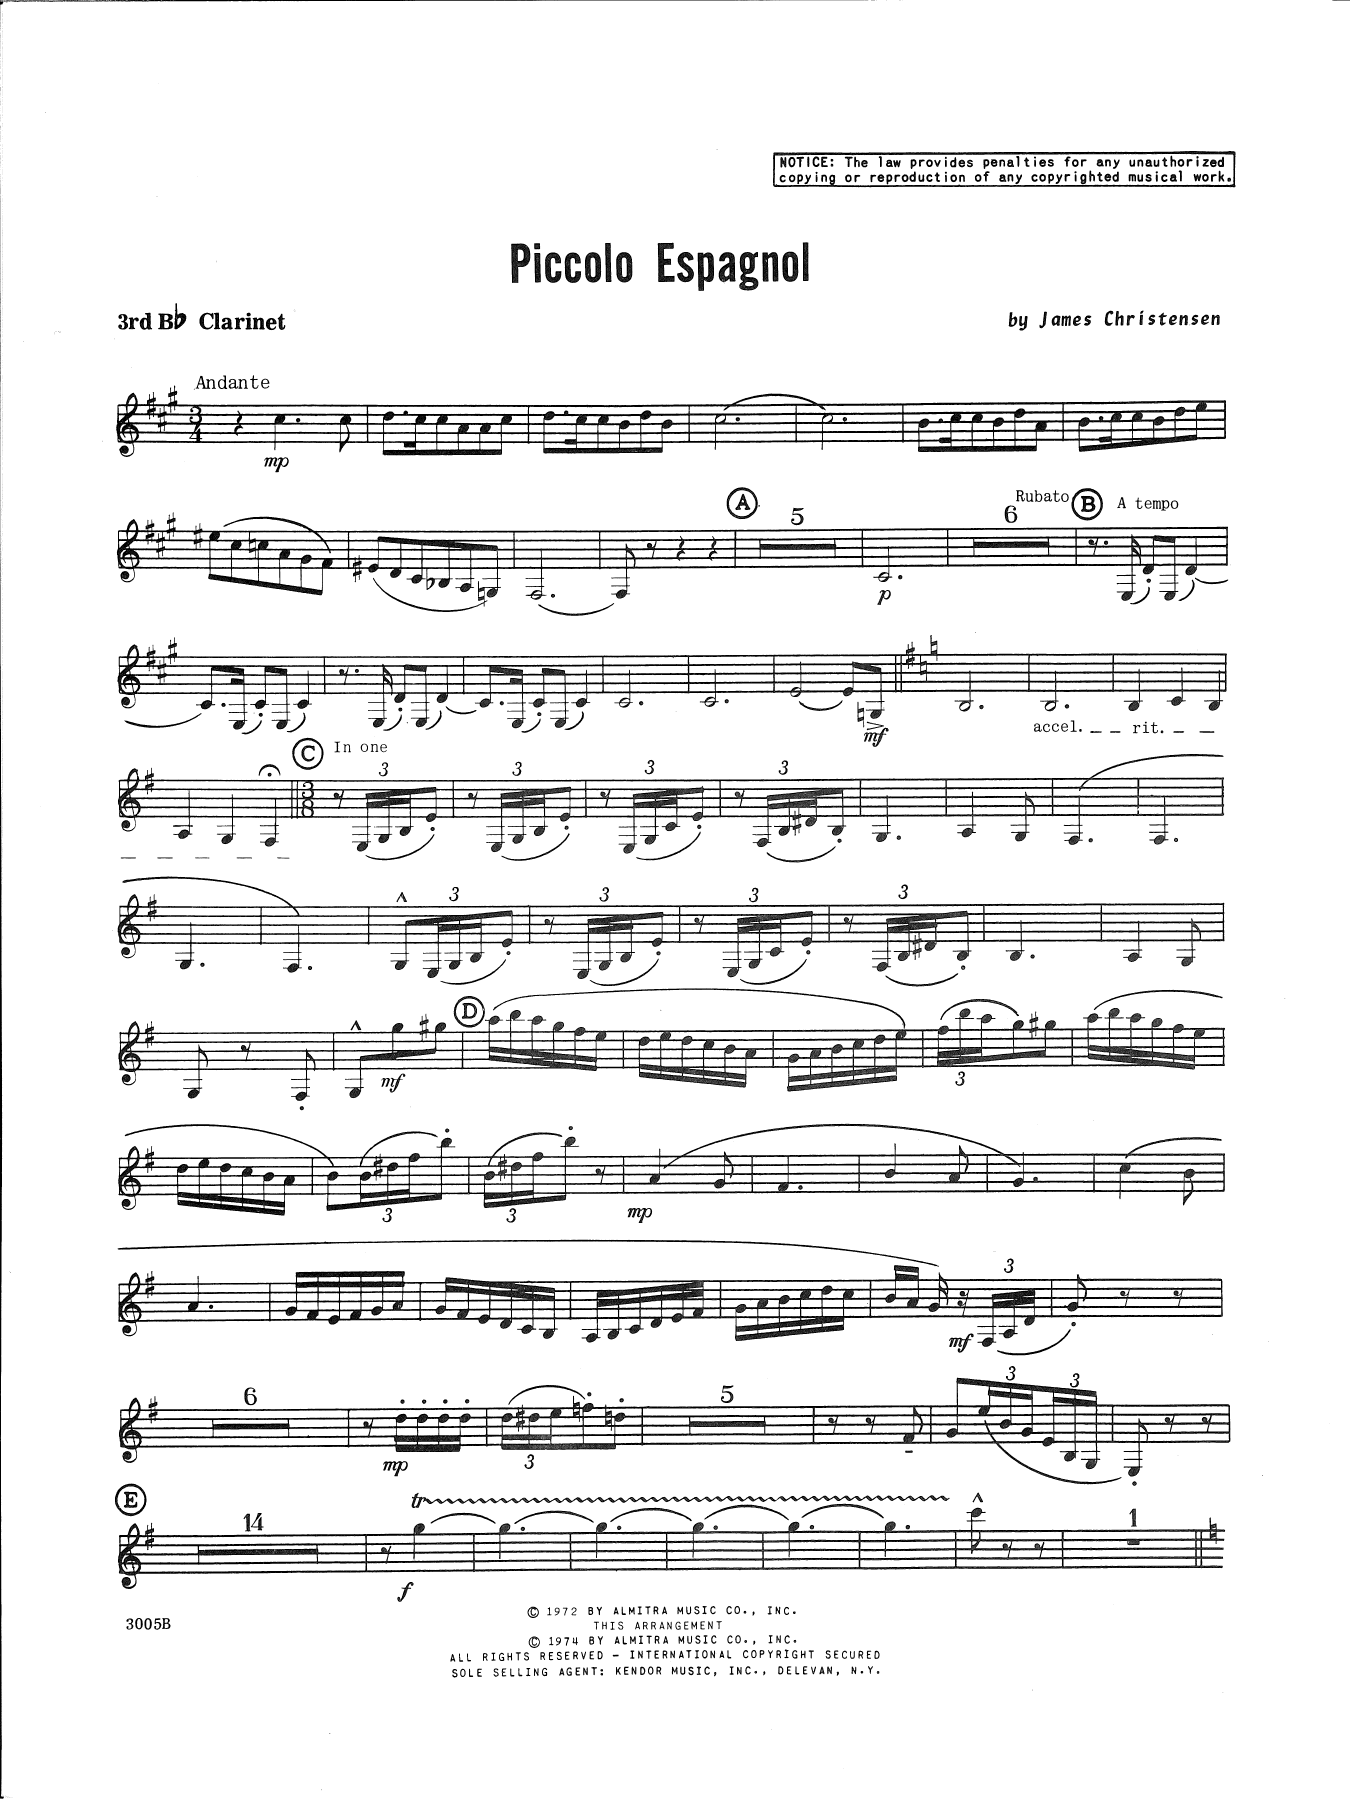 Download James Christensen Piccolo Espagnol - 3rd Bb Clarinet Sheet Music